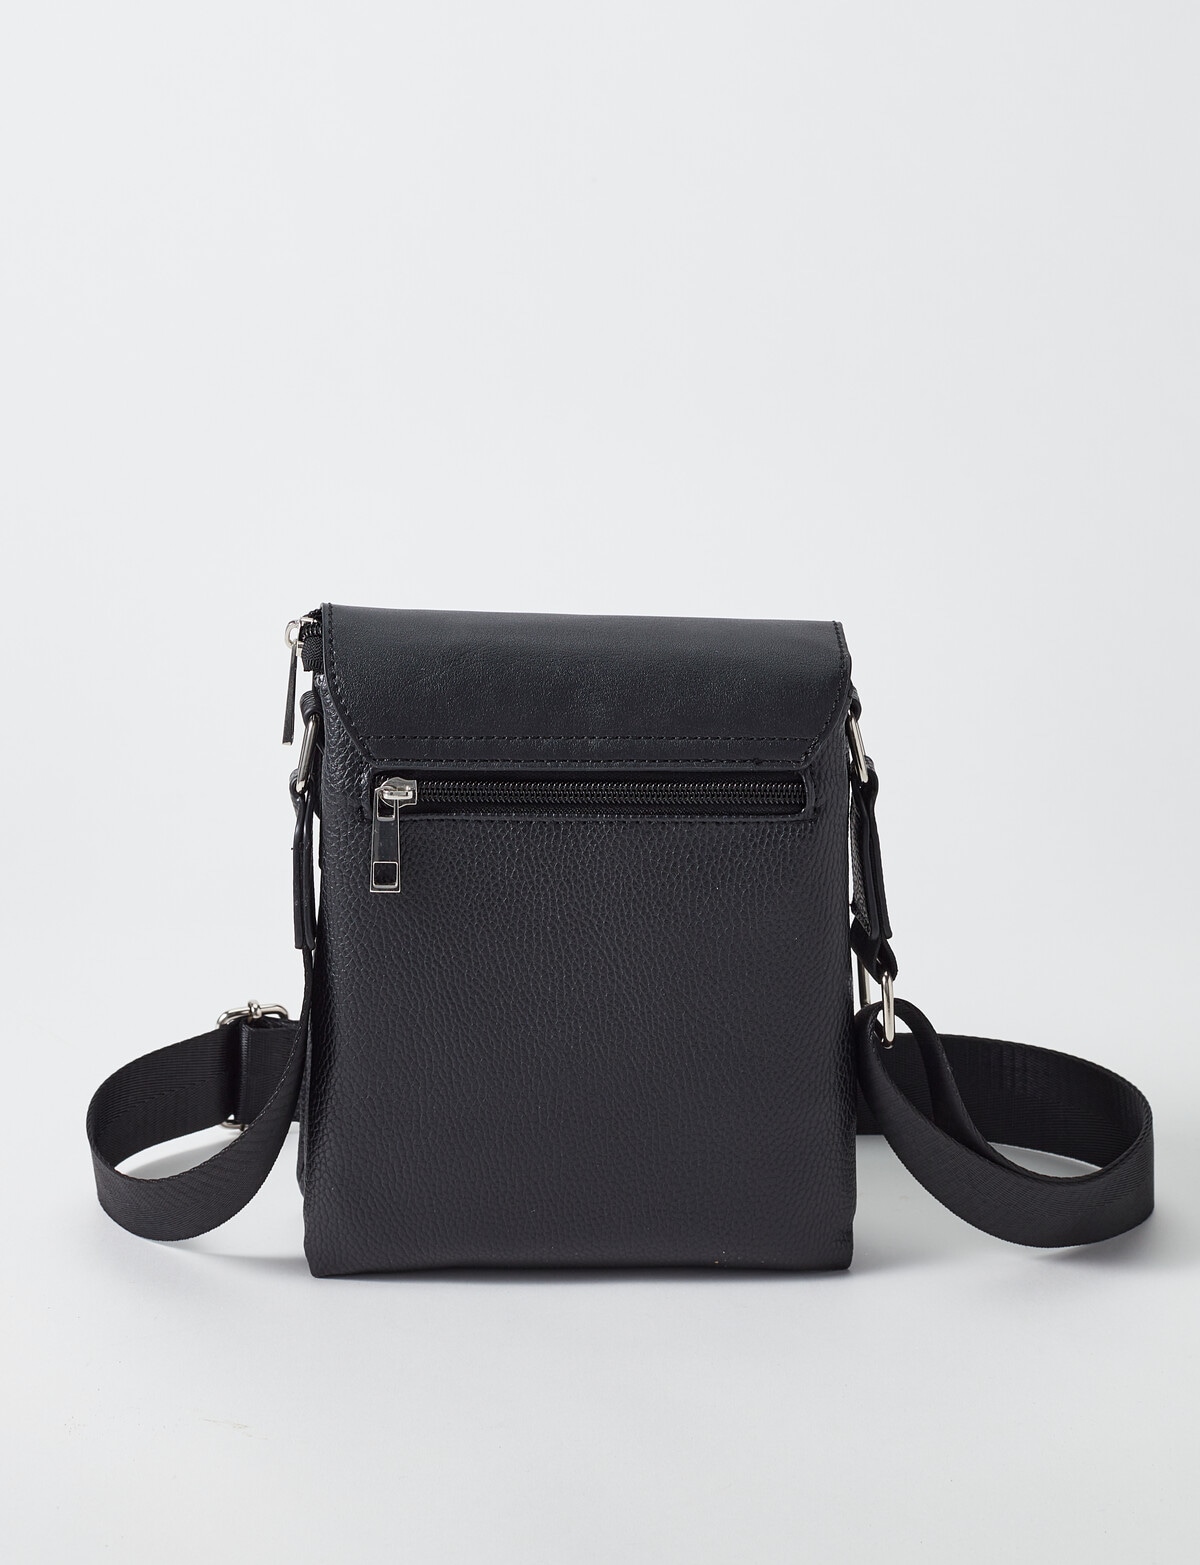 Pronta Moda Astrid Flap Crossbody Bag, Black - Handbags